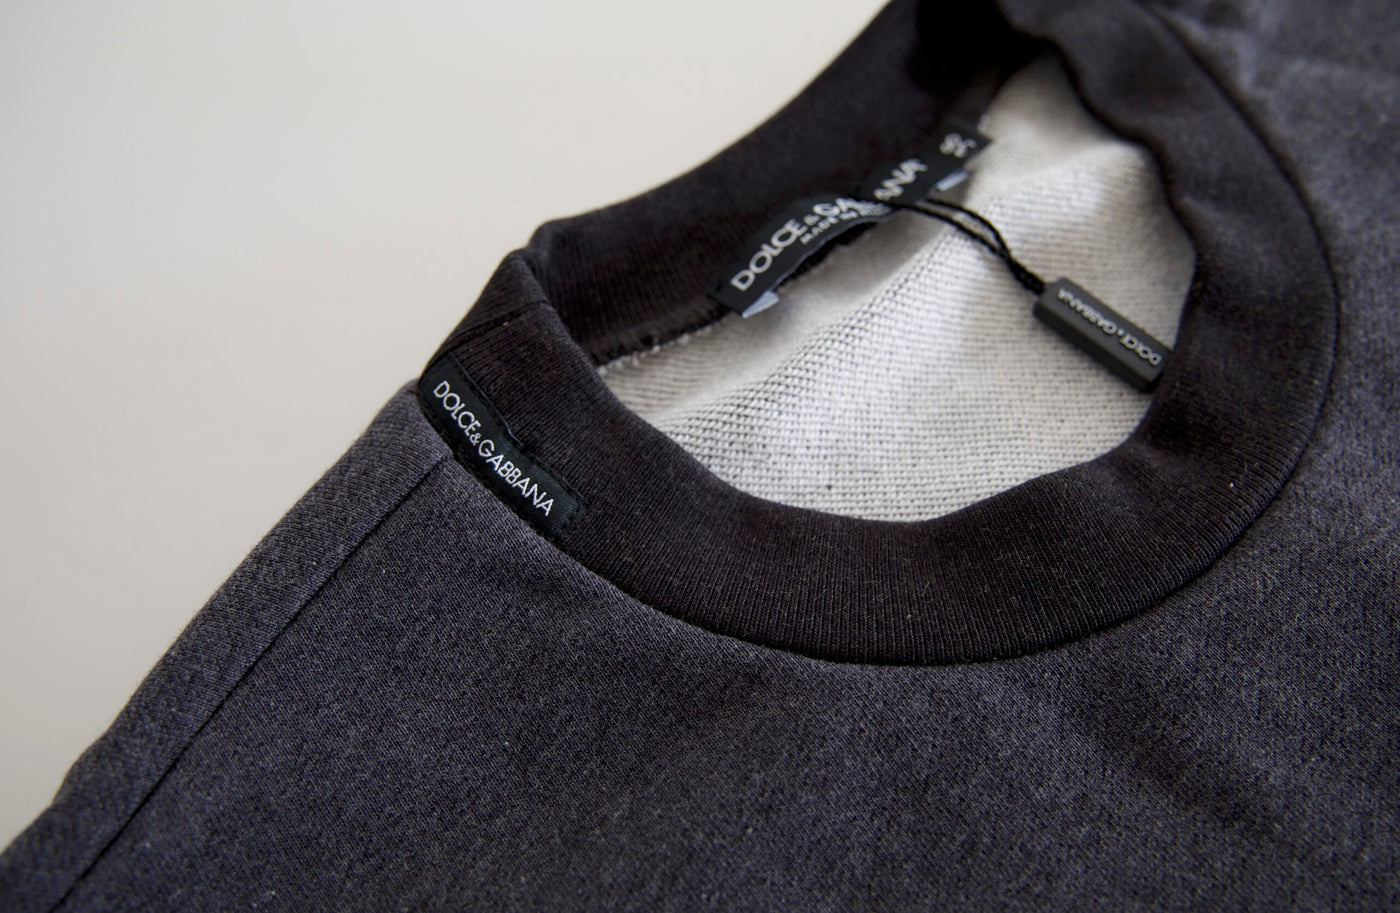 Dolce & Gabbana Dark Gray Cotton Crew Neck Pullover Sweater